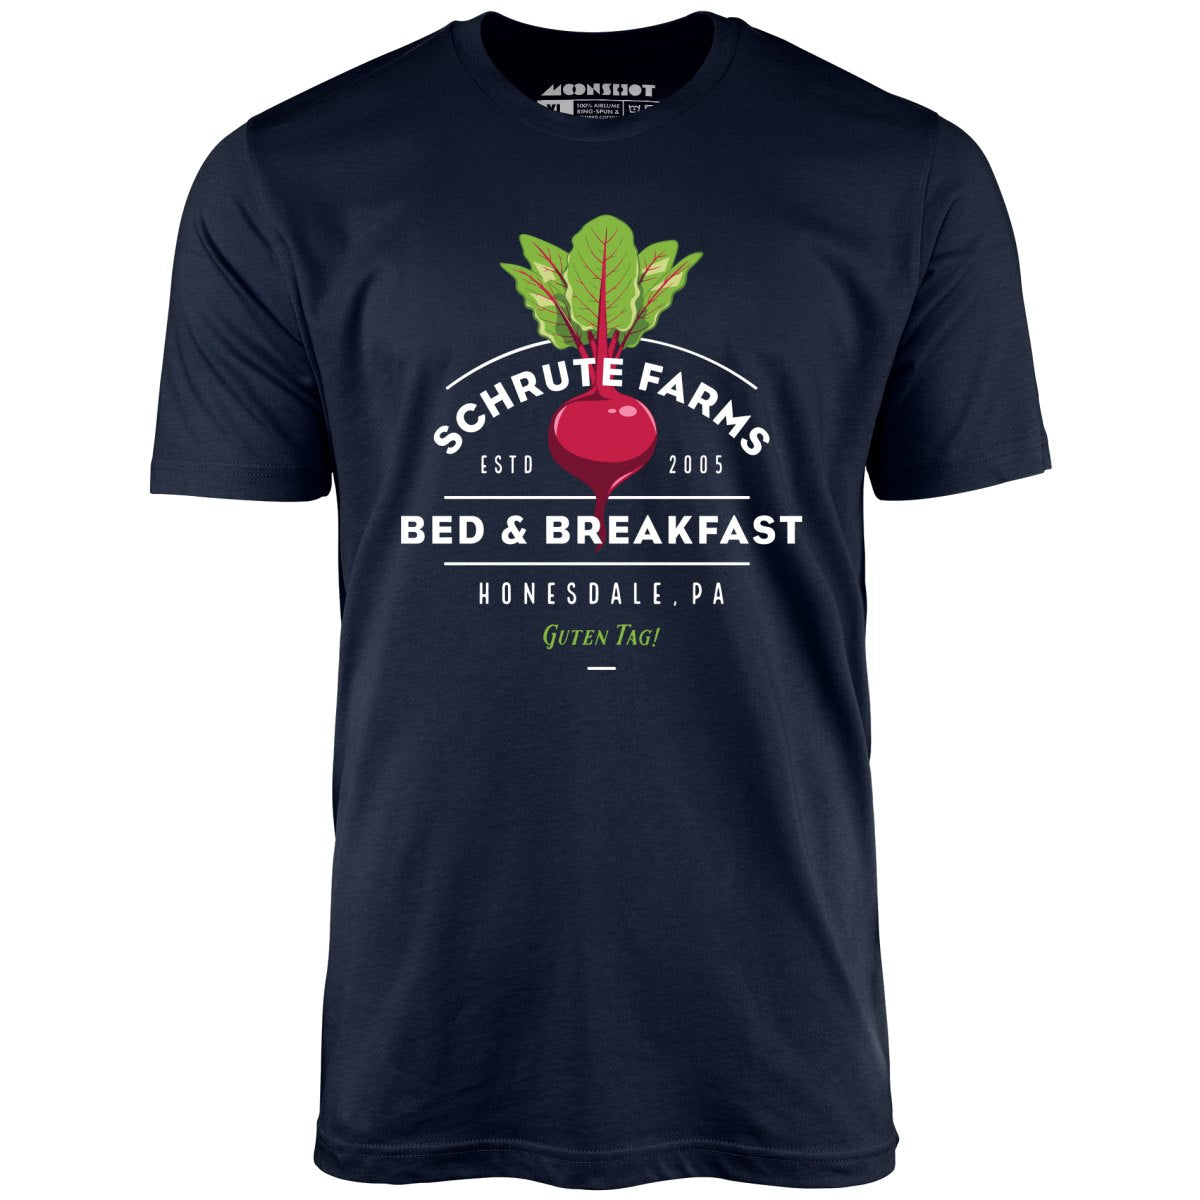 Schrute Farms Bed & Breakfast - Unisex T-Shirt